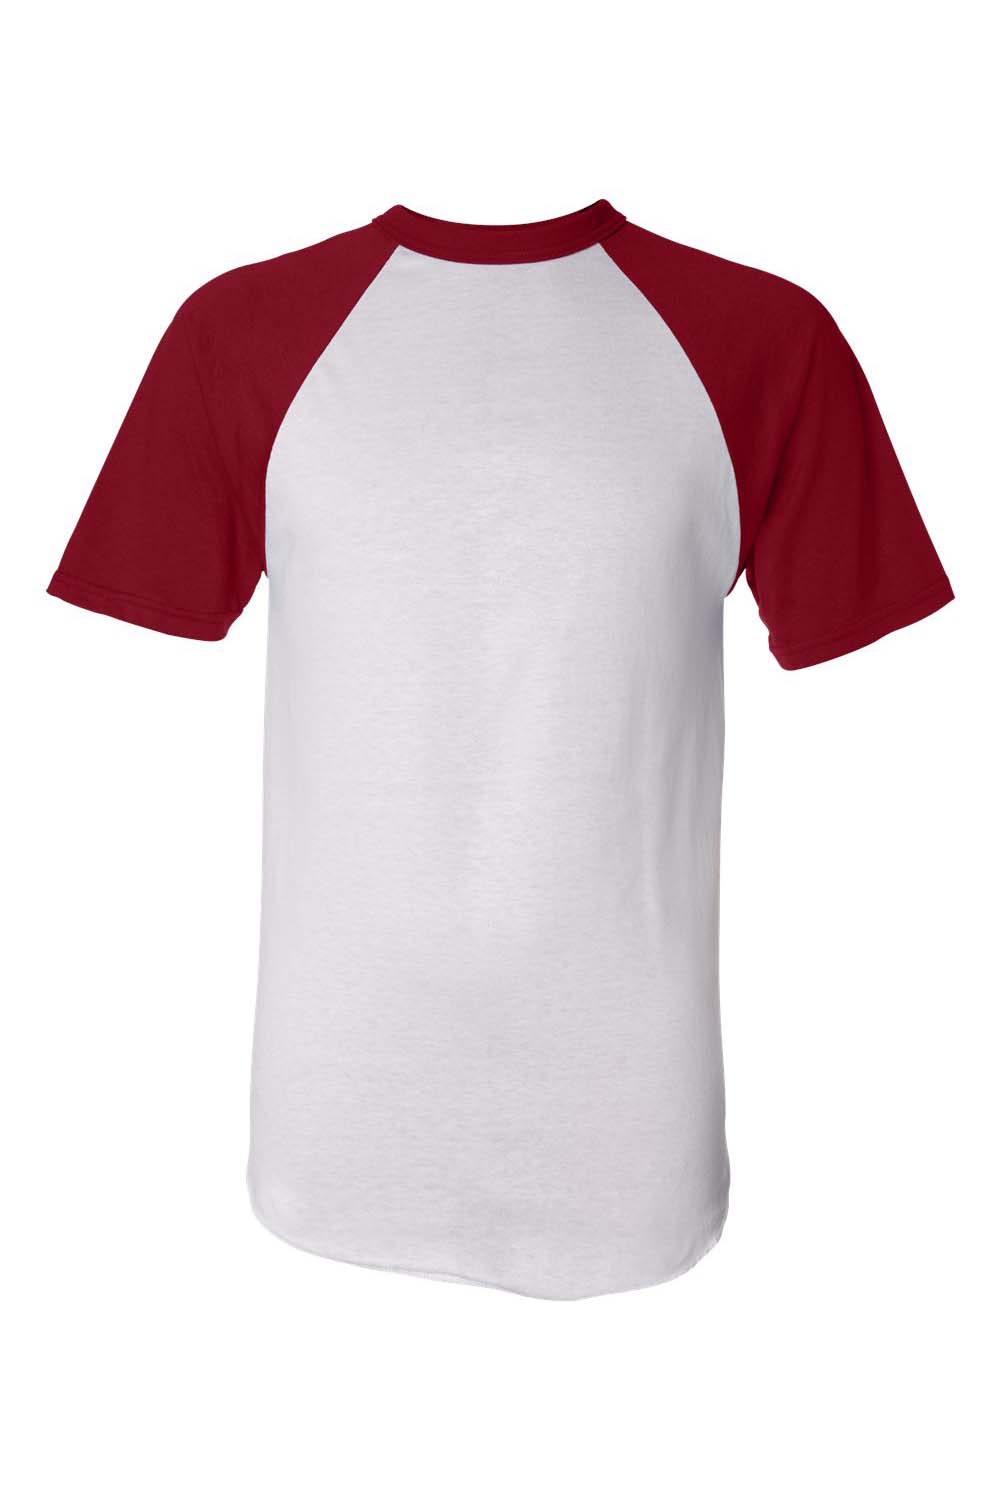 Augusta Sportswear 423 Mens Short Sleeve Crewneck T-Shirt White/Red Model Flat Front